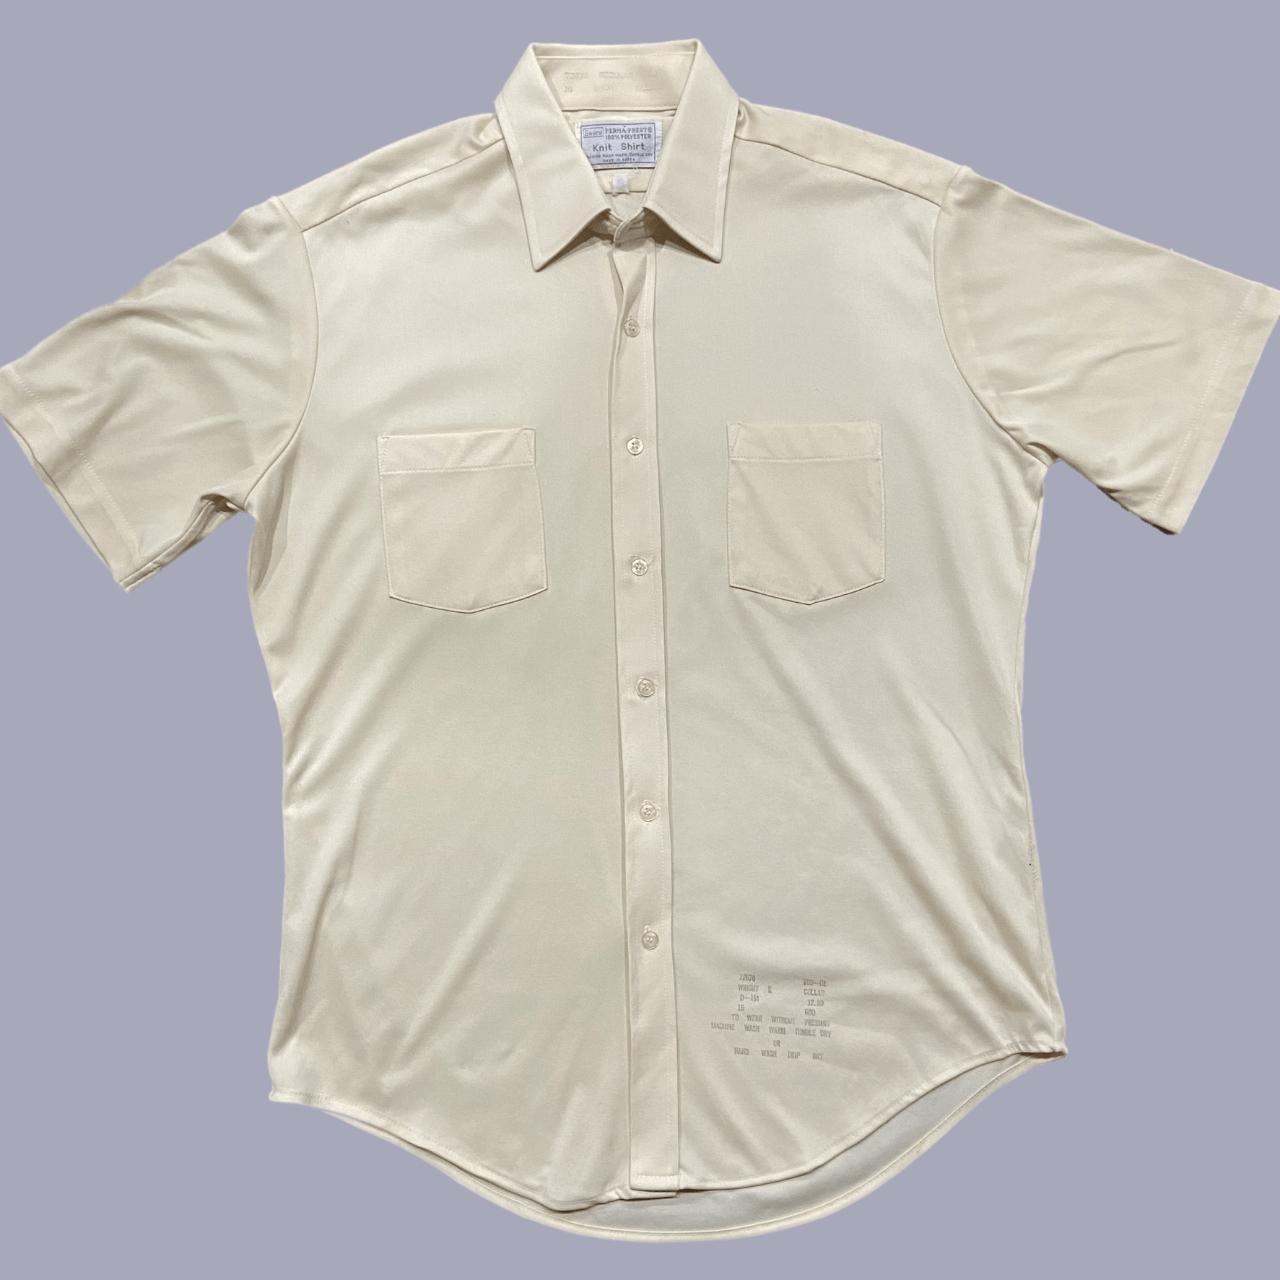 Sears Men's Shirt - Cream - M